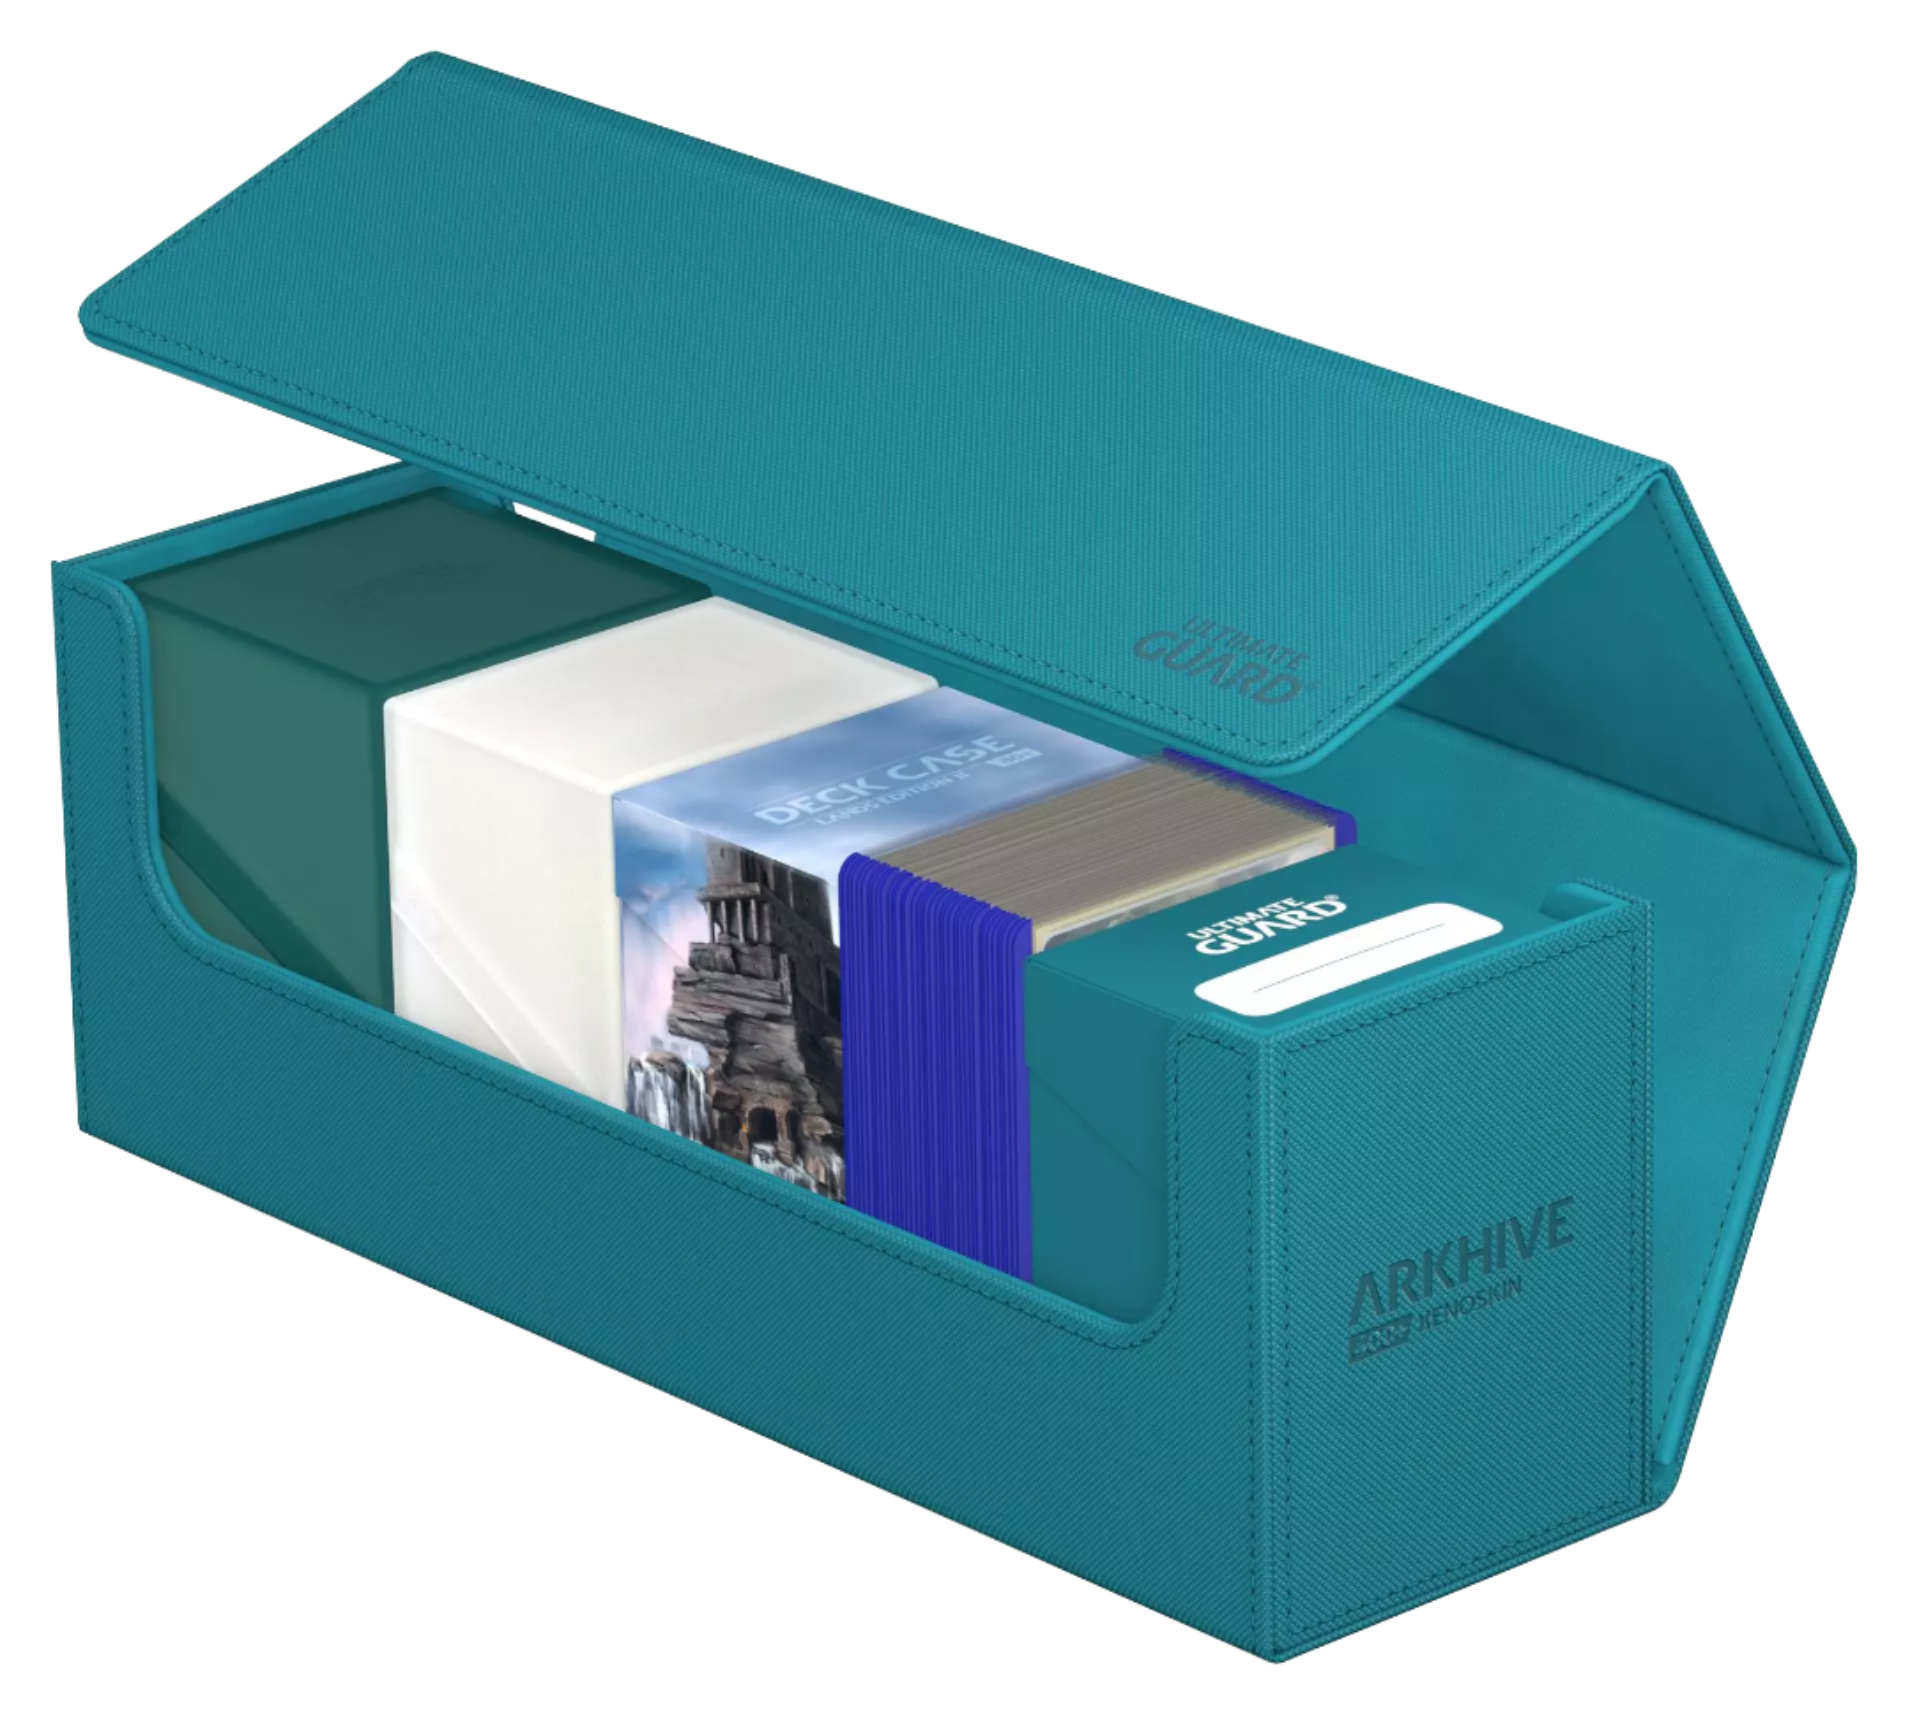 Ultimate Guard - Arkhive XenoSkin - 400+ Card Case - Monocolor Petrol